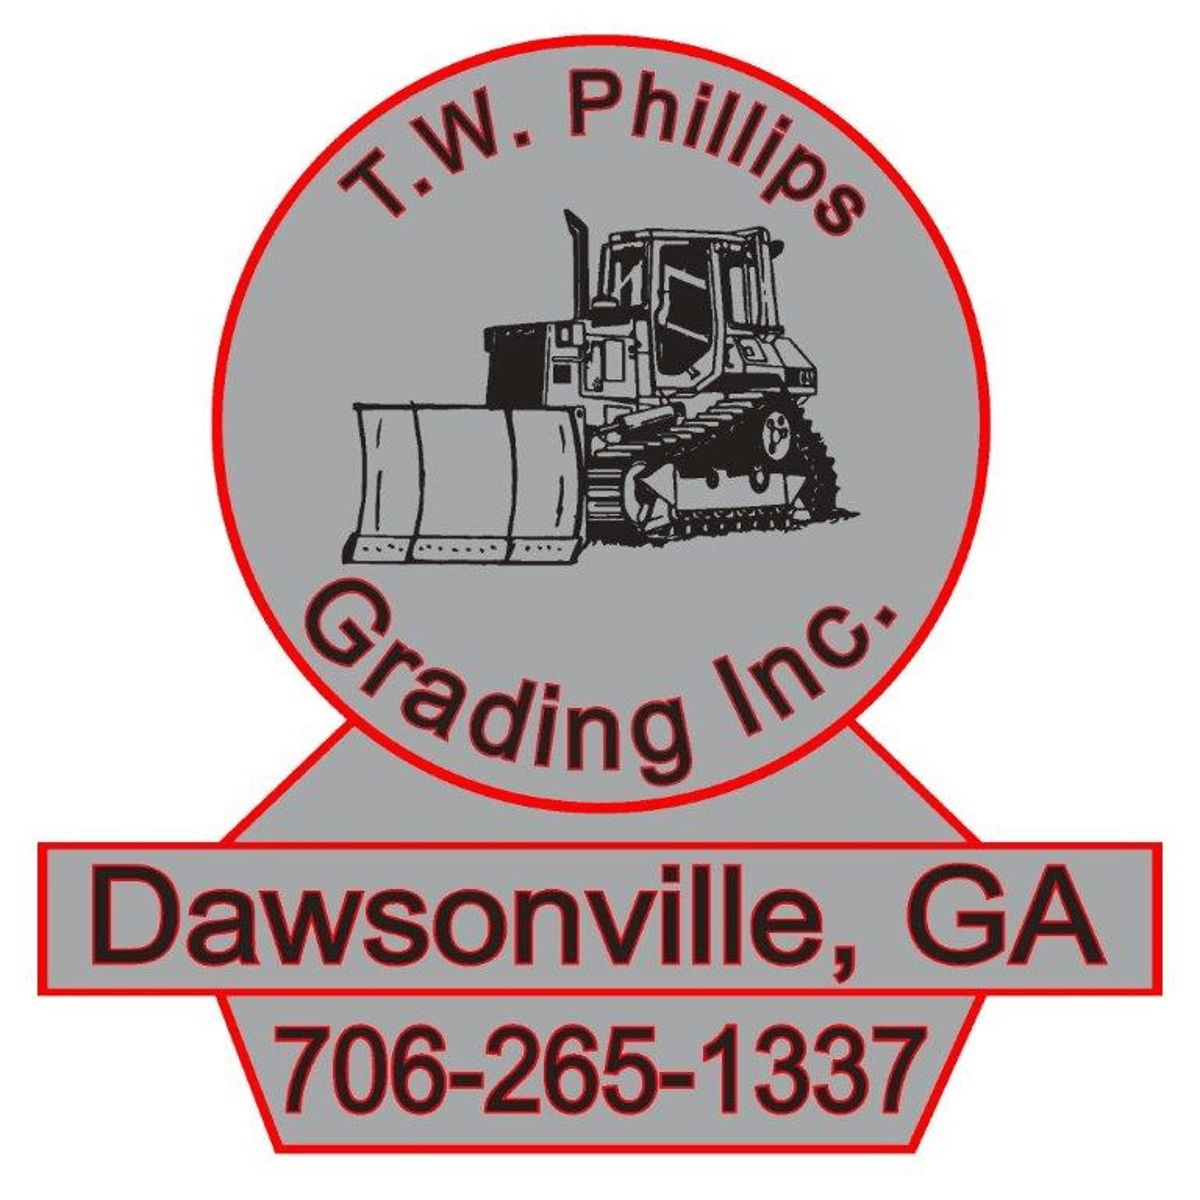 T W Phillips Grading Inc